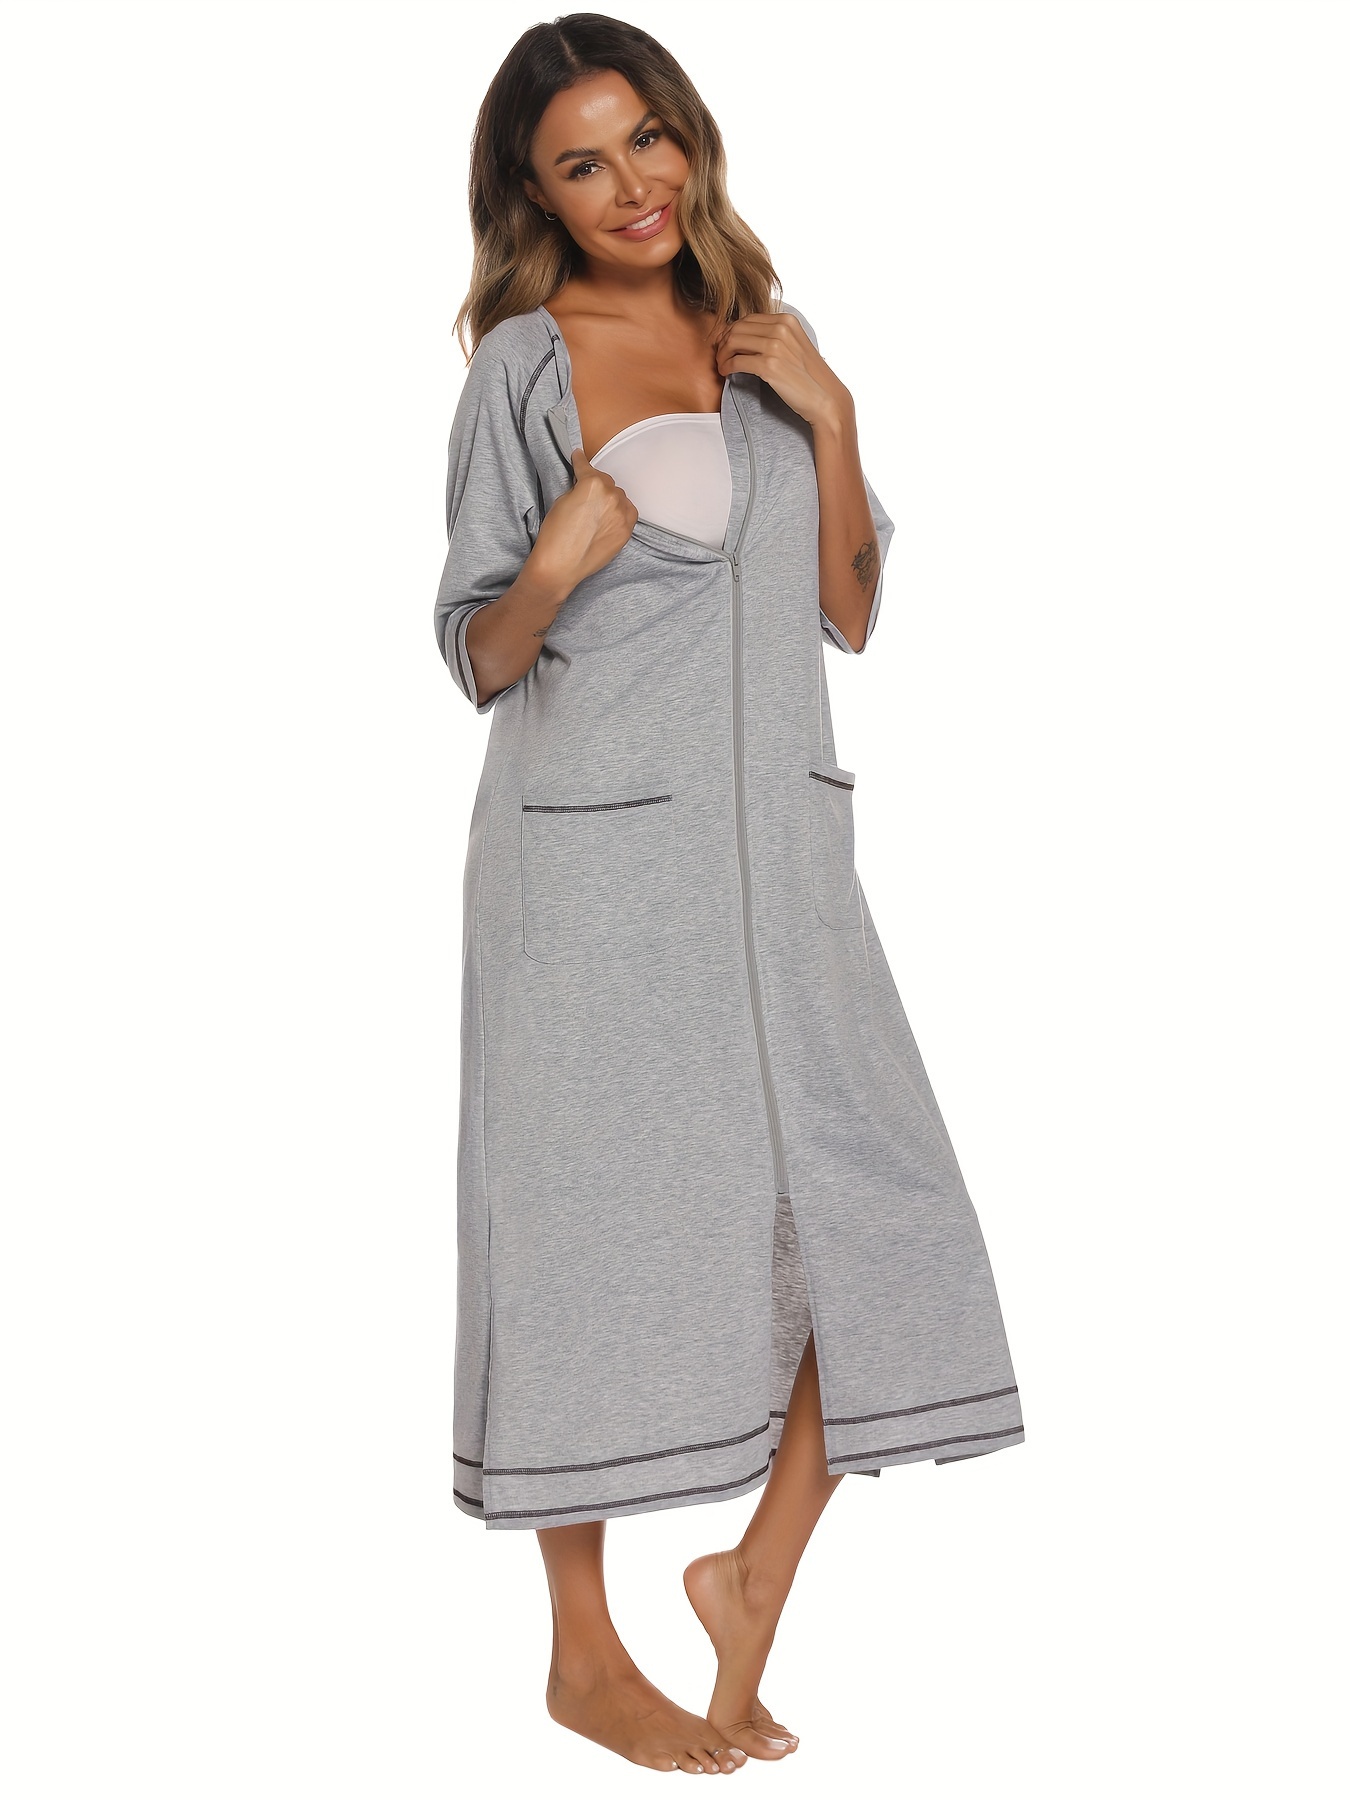 Veseacky Women Maternity Nightgown Short Sleeve Sleepshirt Cotton